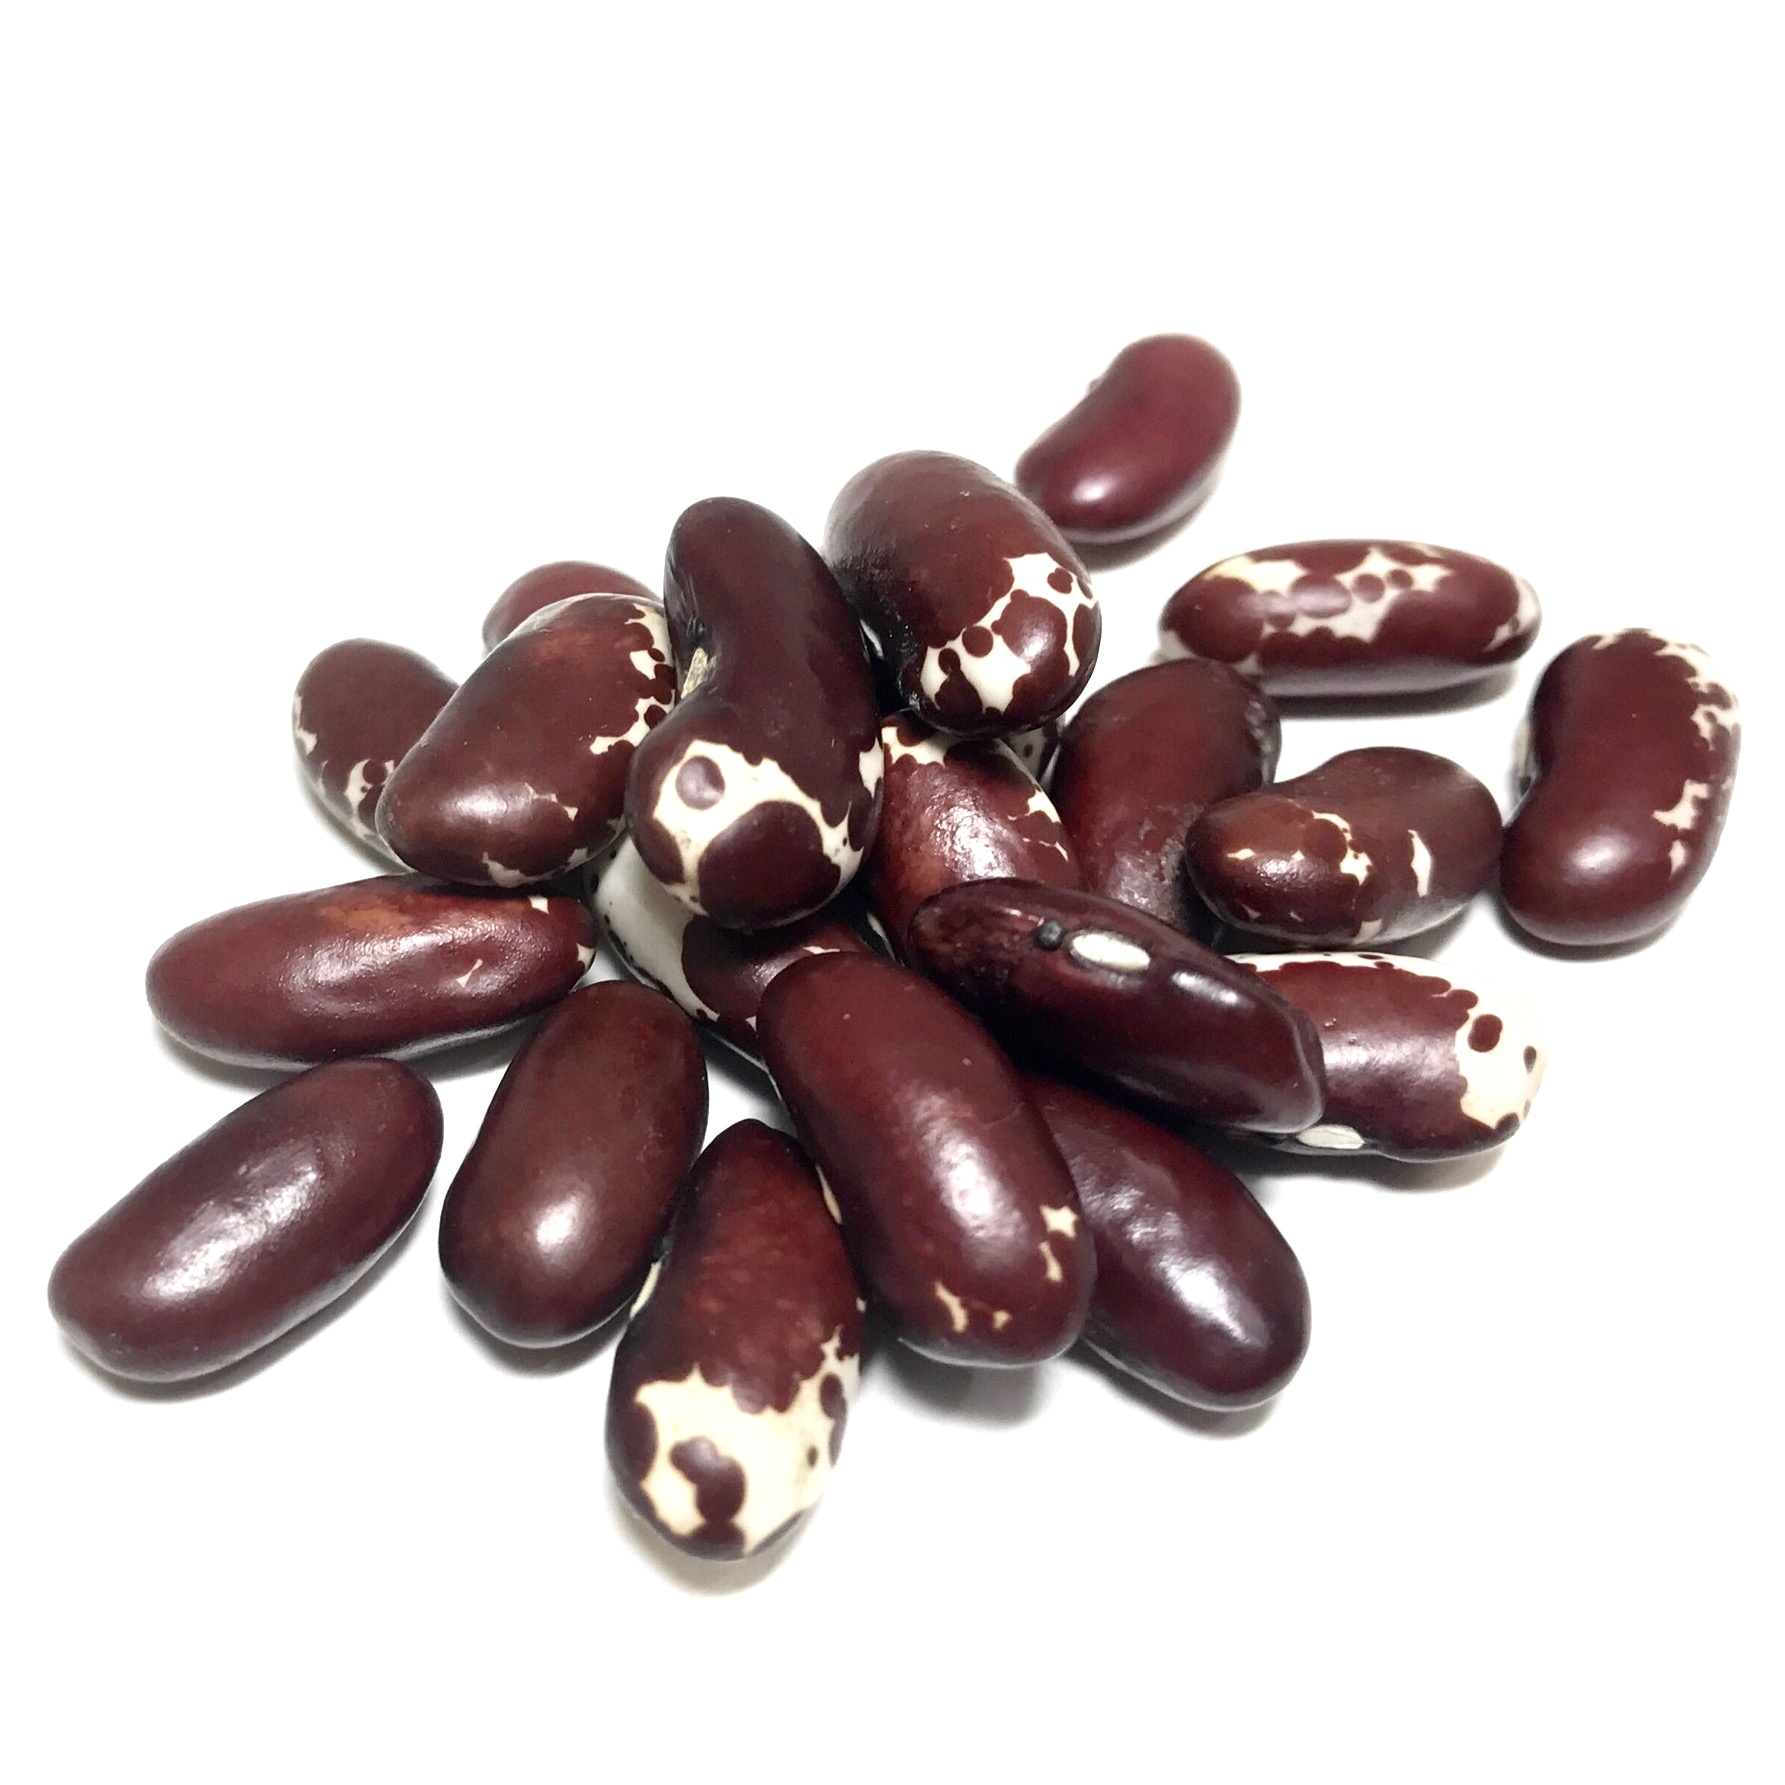 Jacob's Cattle Heirloom Dry Beans